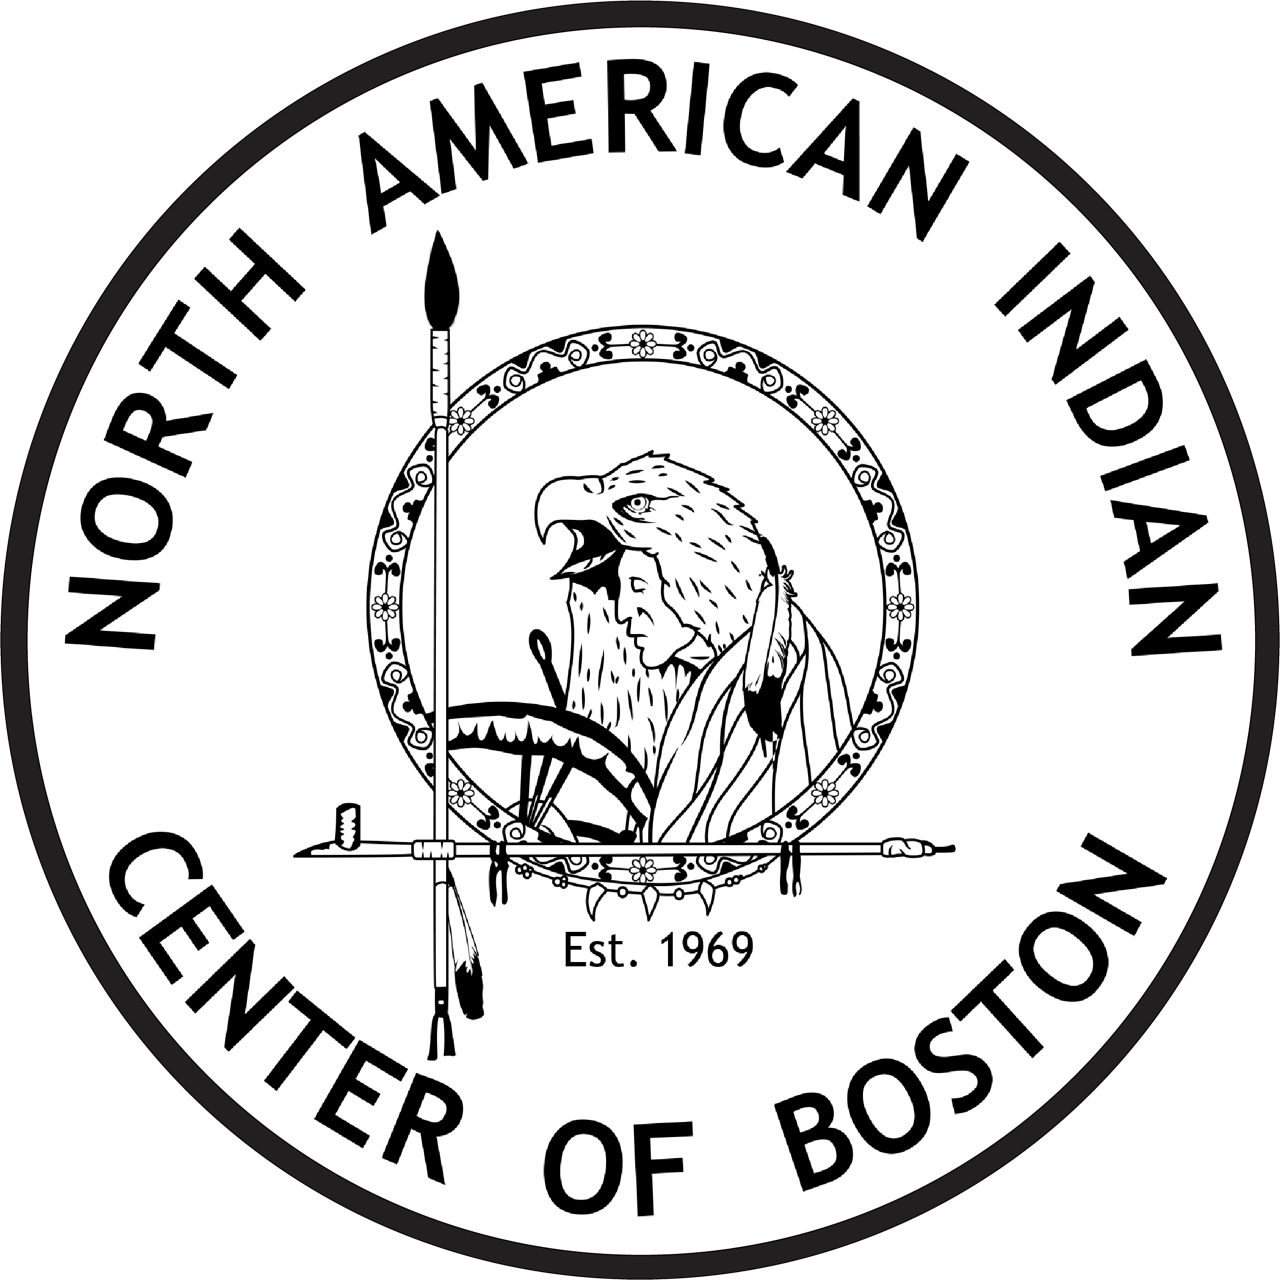 North American Indian Center of Boston